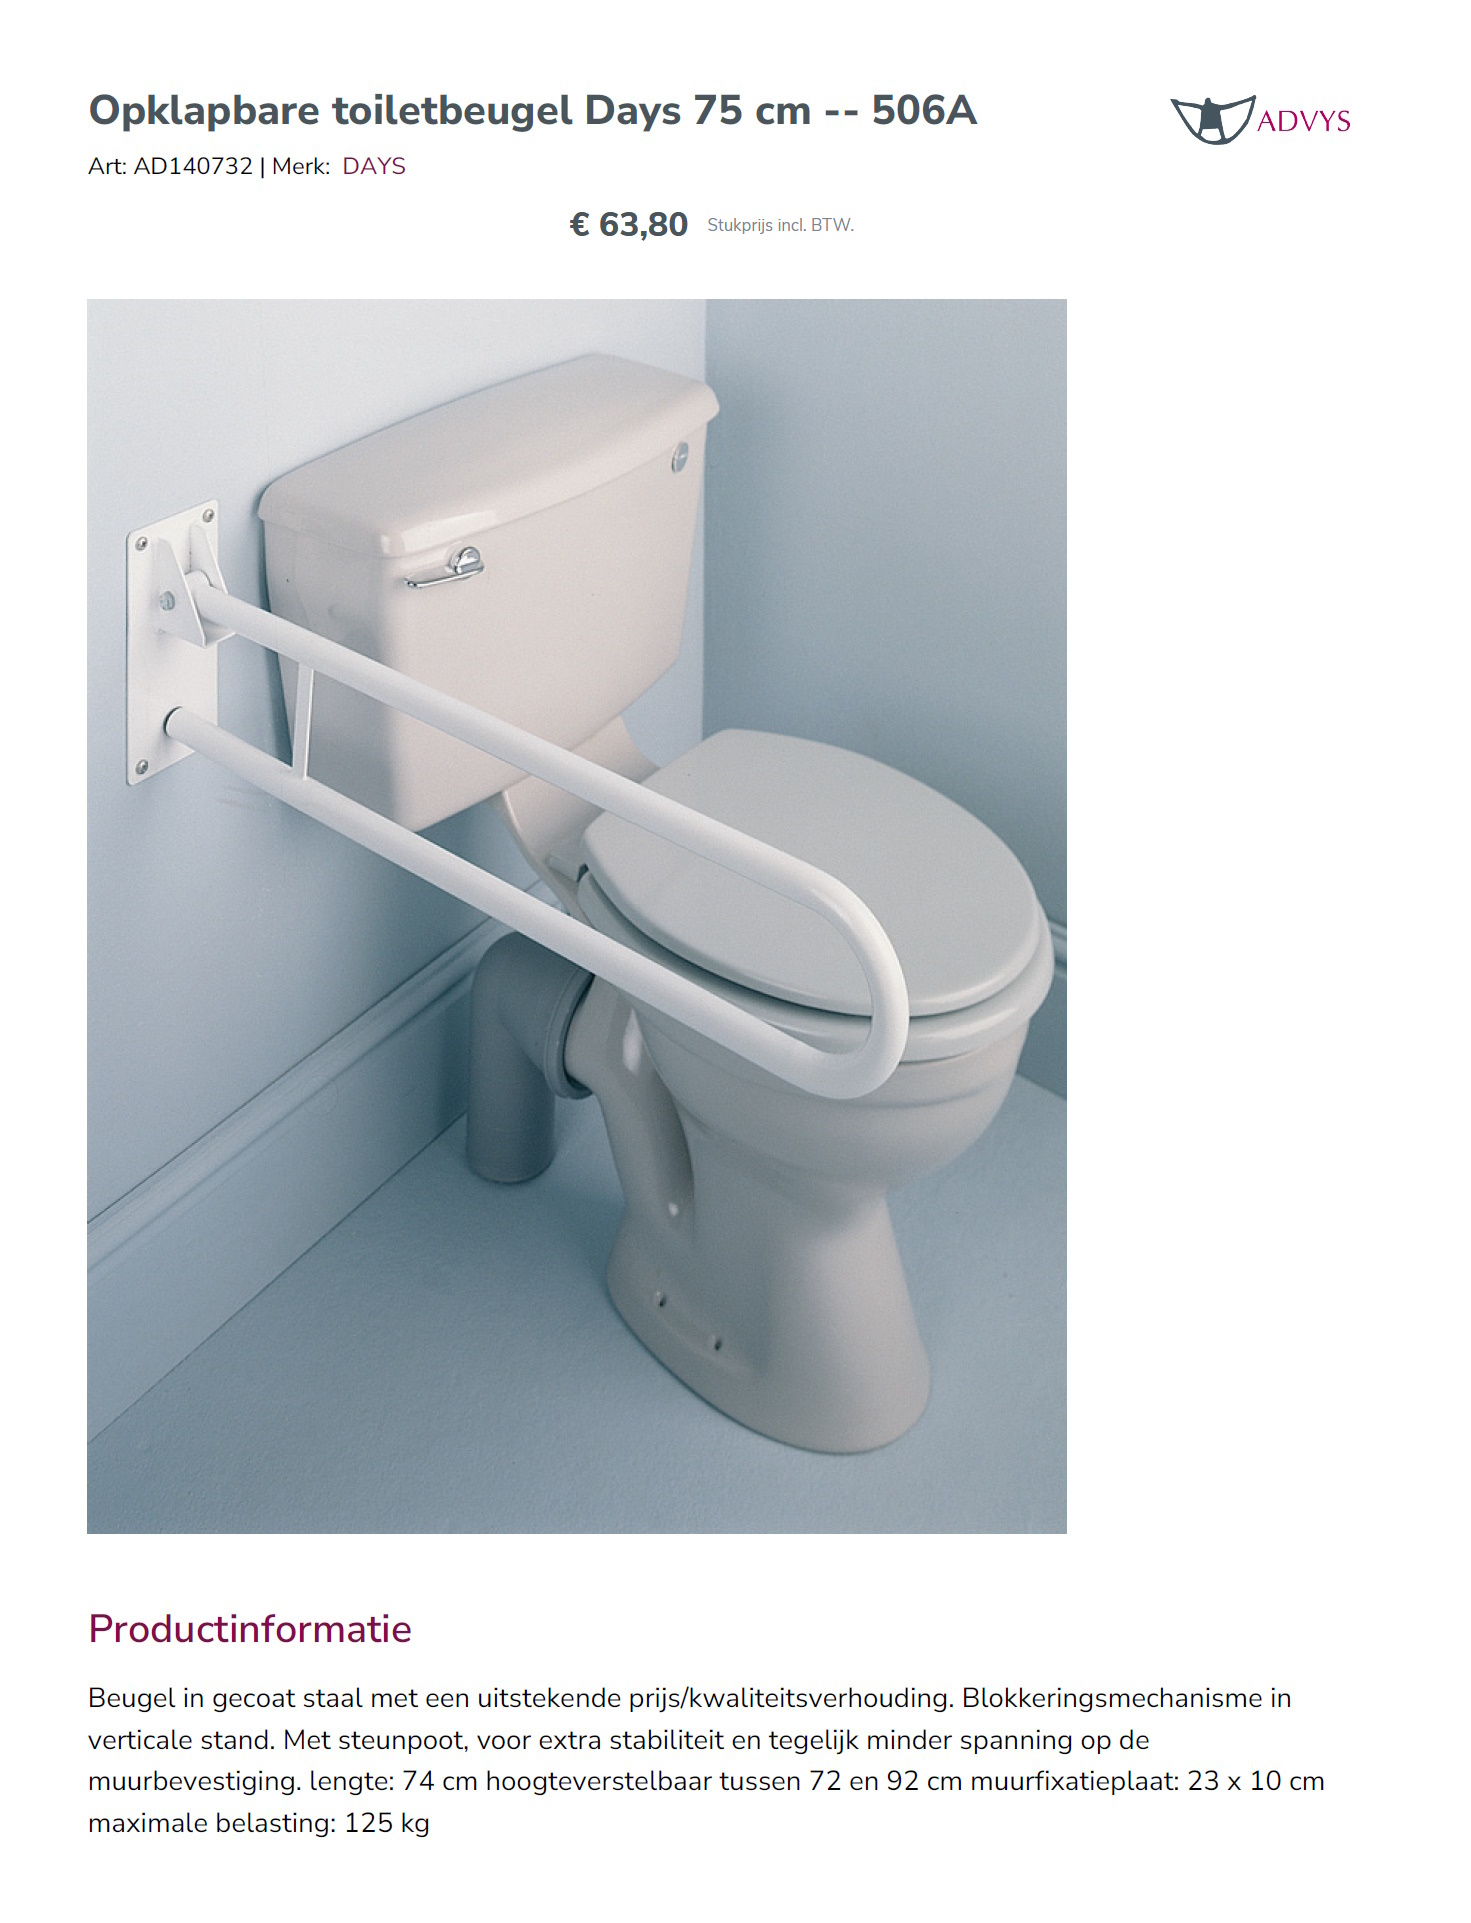 toegevoegd document 2 van Days Opklapbare toiletbeugel Days standaard  